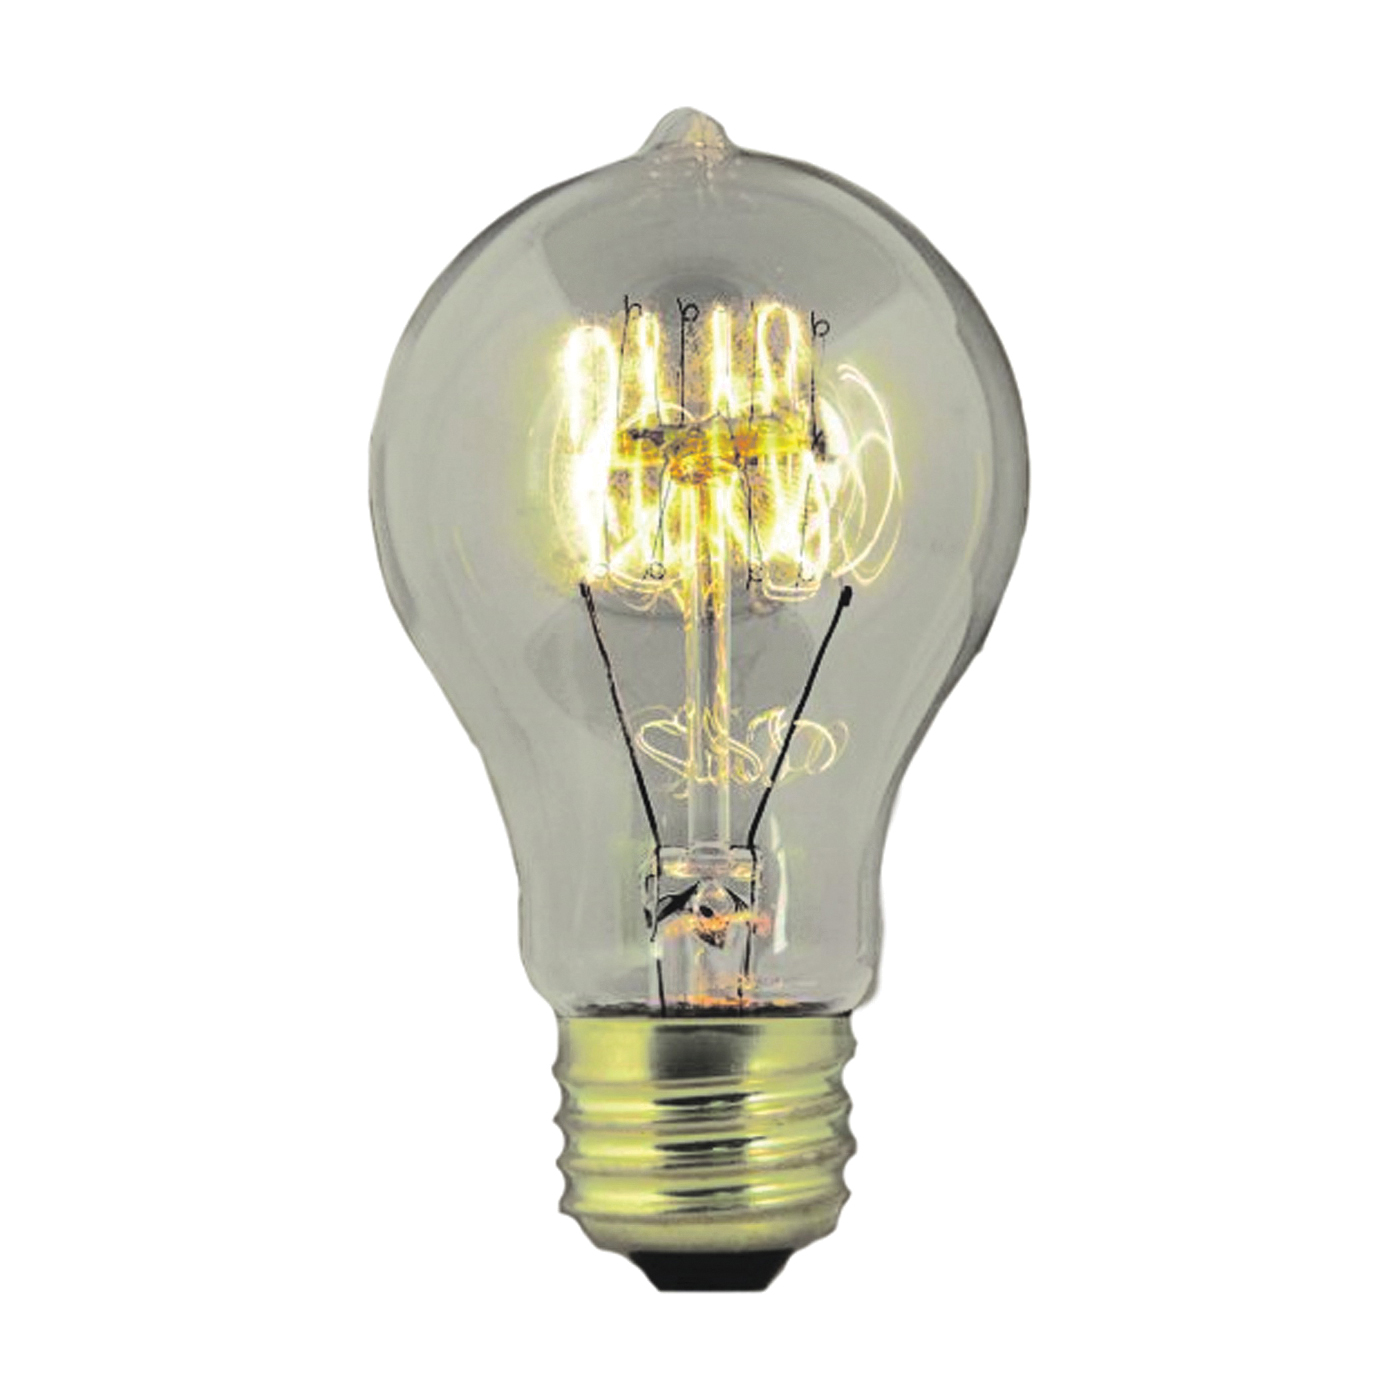 BP40AT19/RP Incandescent Lamp, 40 W, A19 Lamp, Medium E26 Lamp Base, 170 Lumens, 2700 K Color Temp